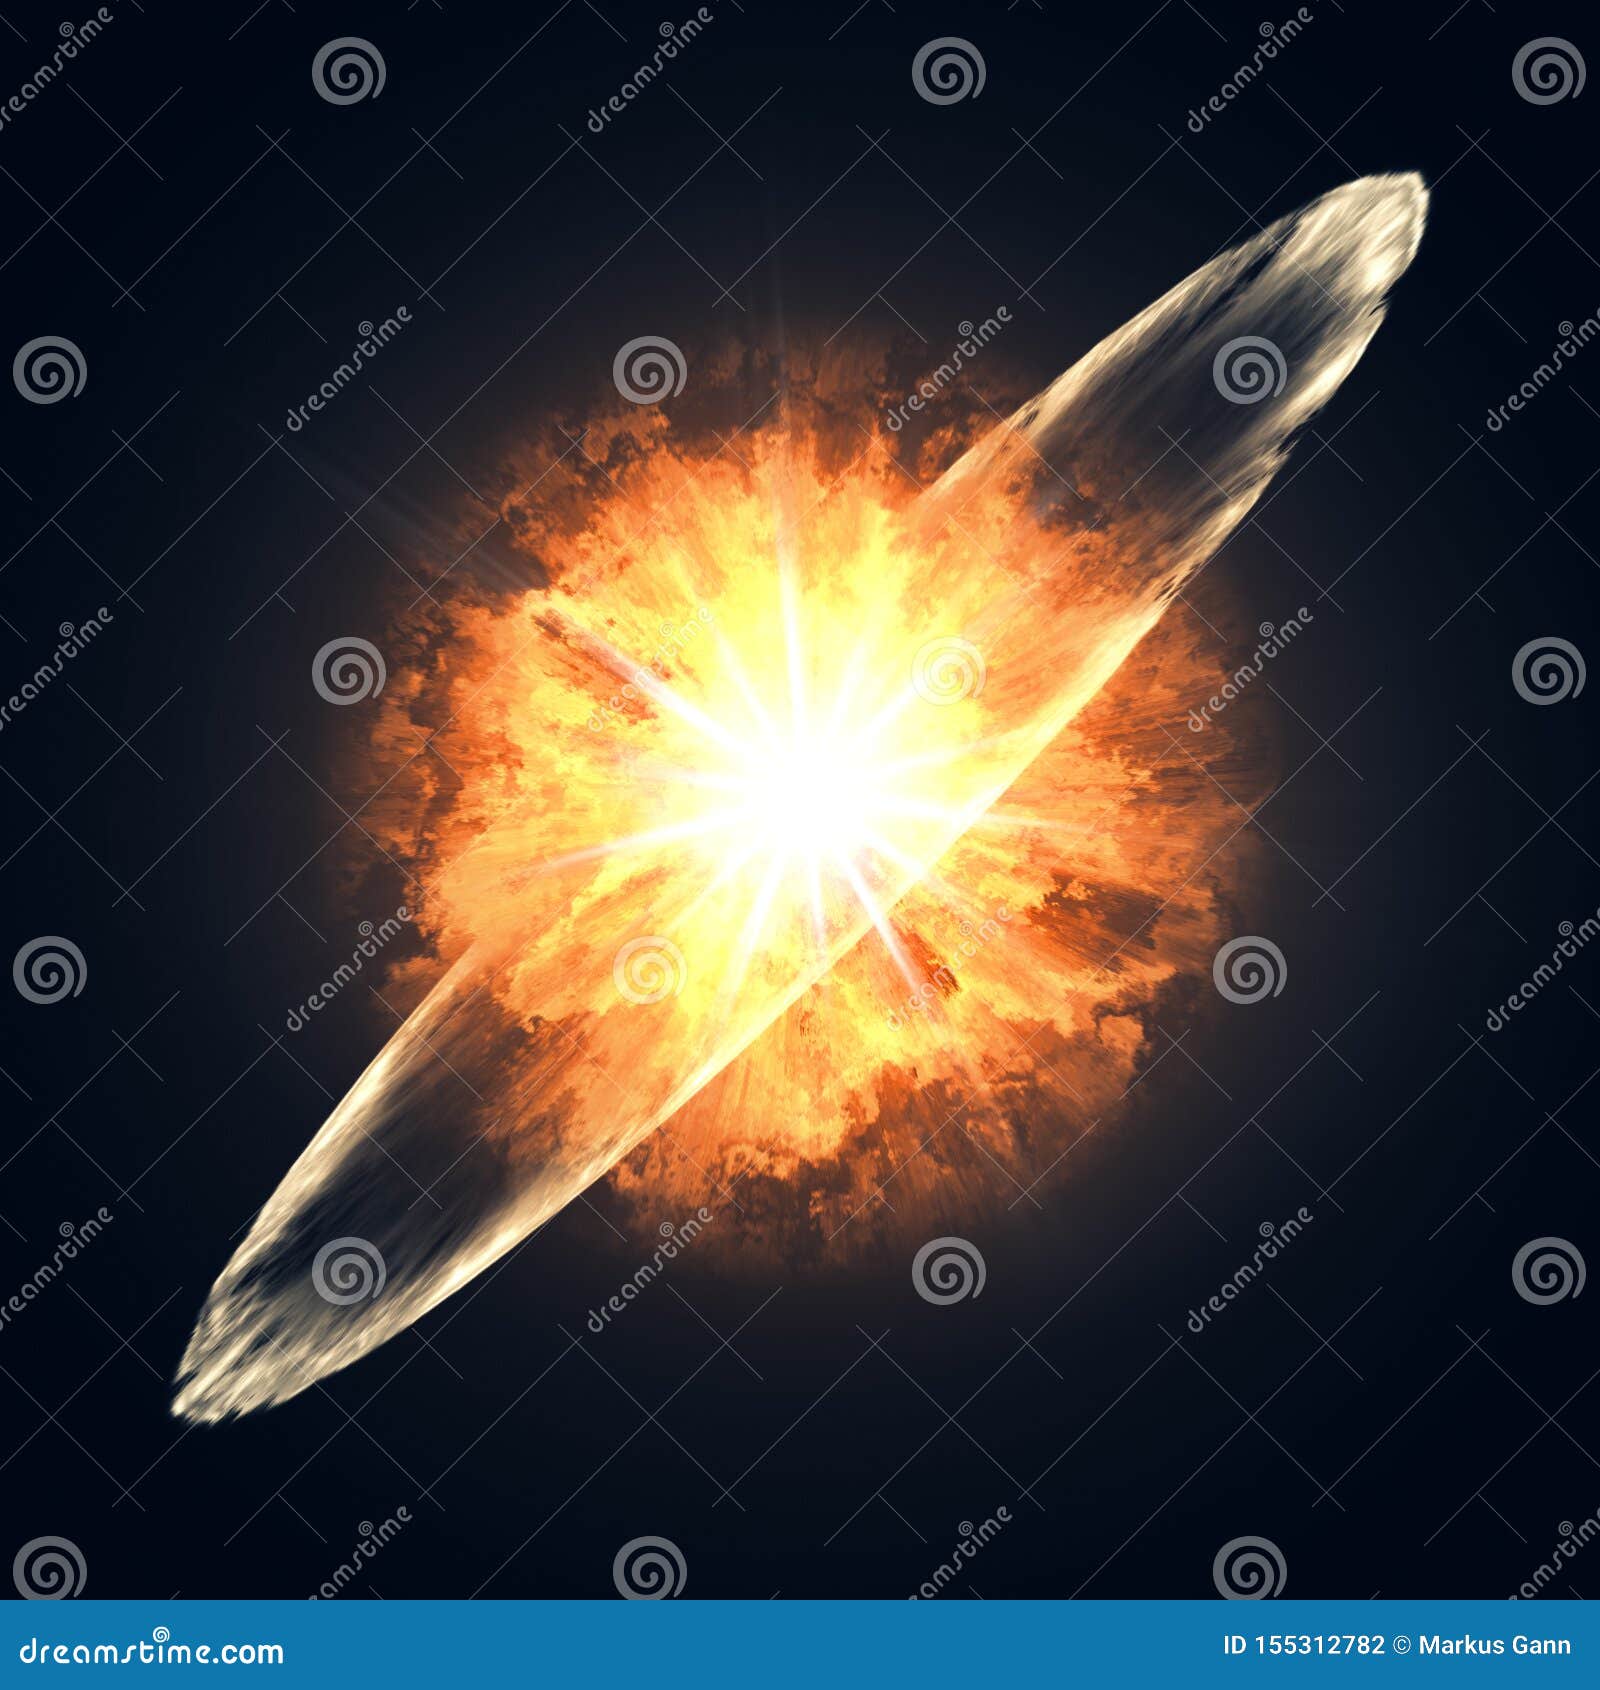 supernova-explosion-space-illustration-supernova-explosion-space-155312782.jpg